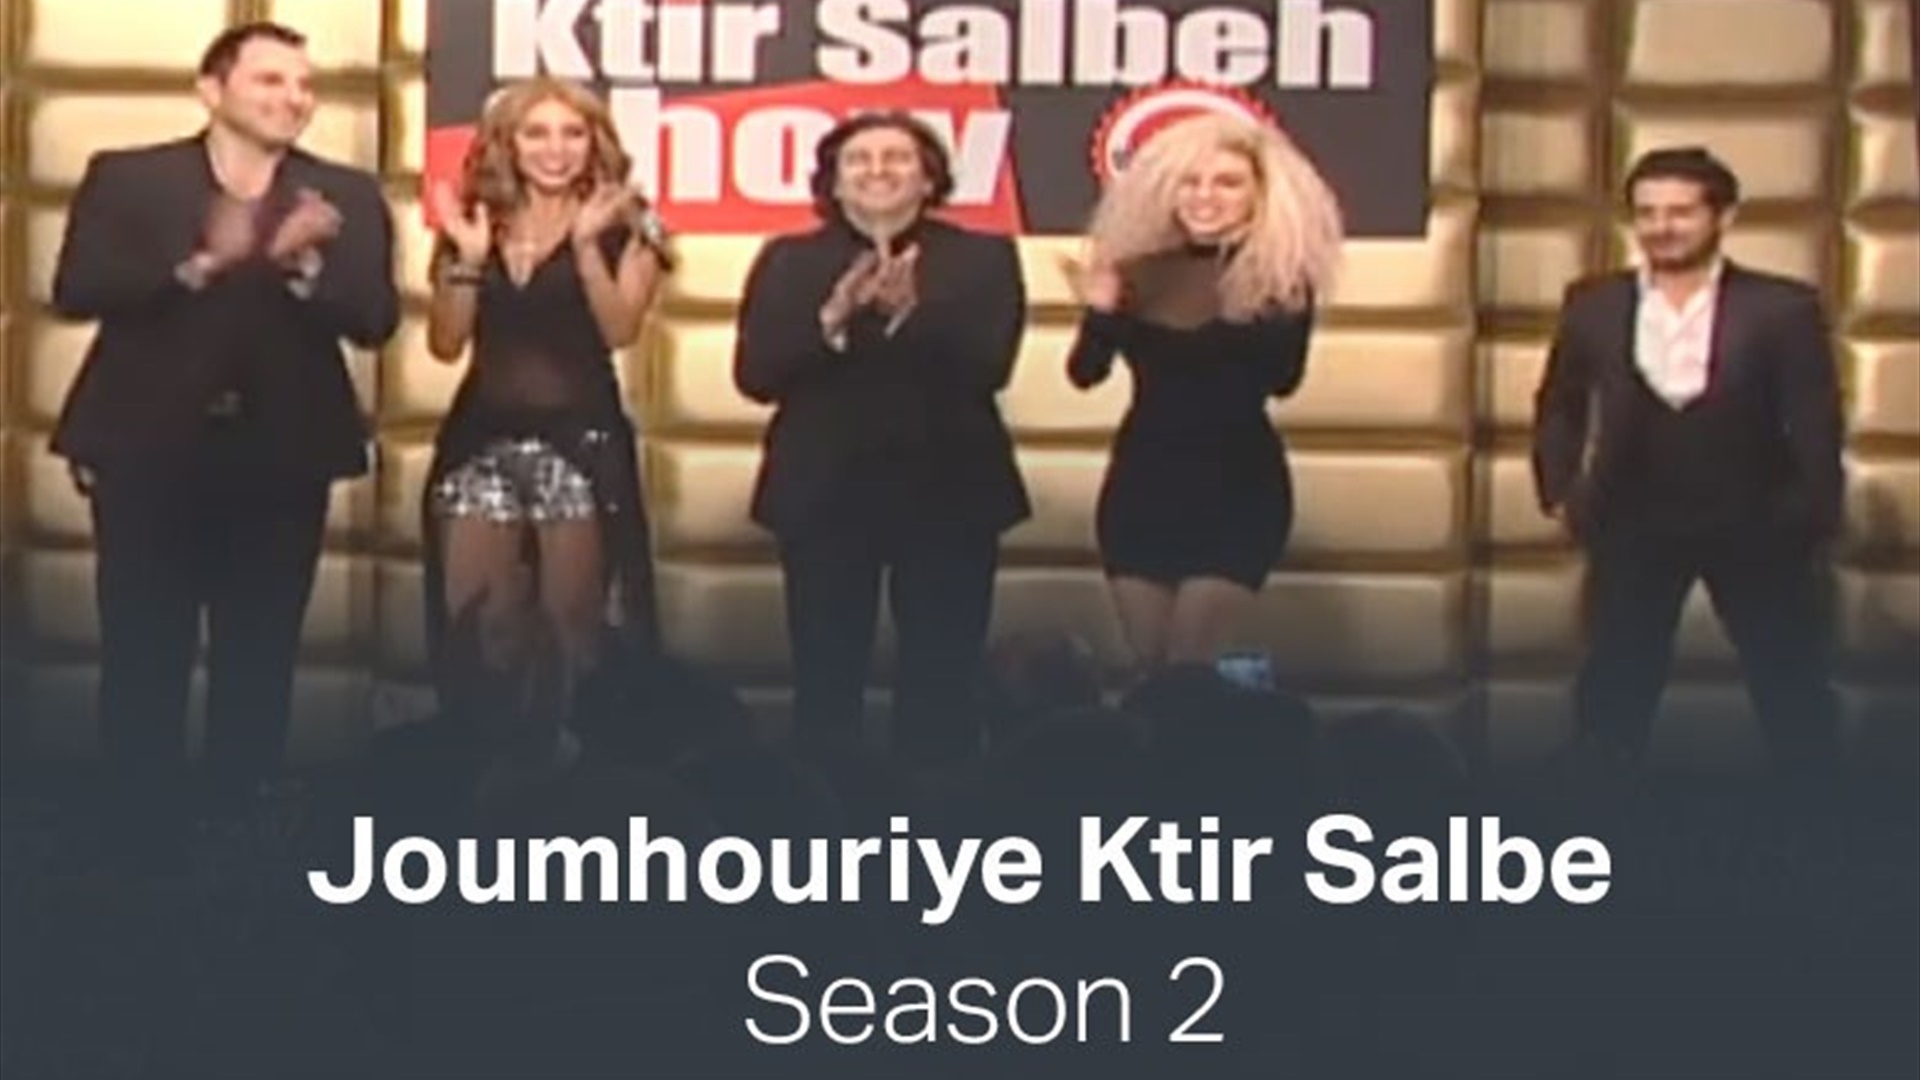 Joumhouriye Ktir Salbe – Season 2